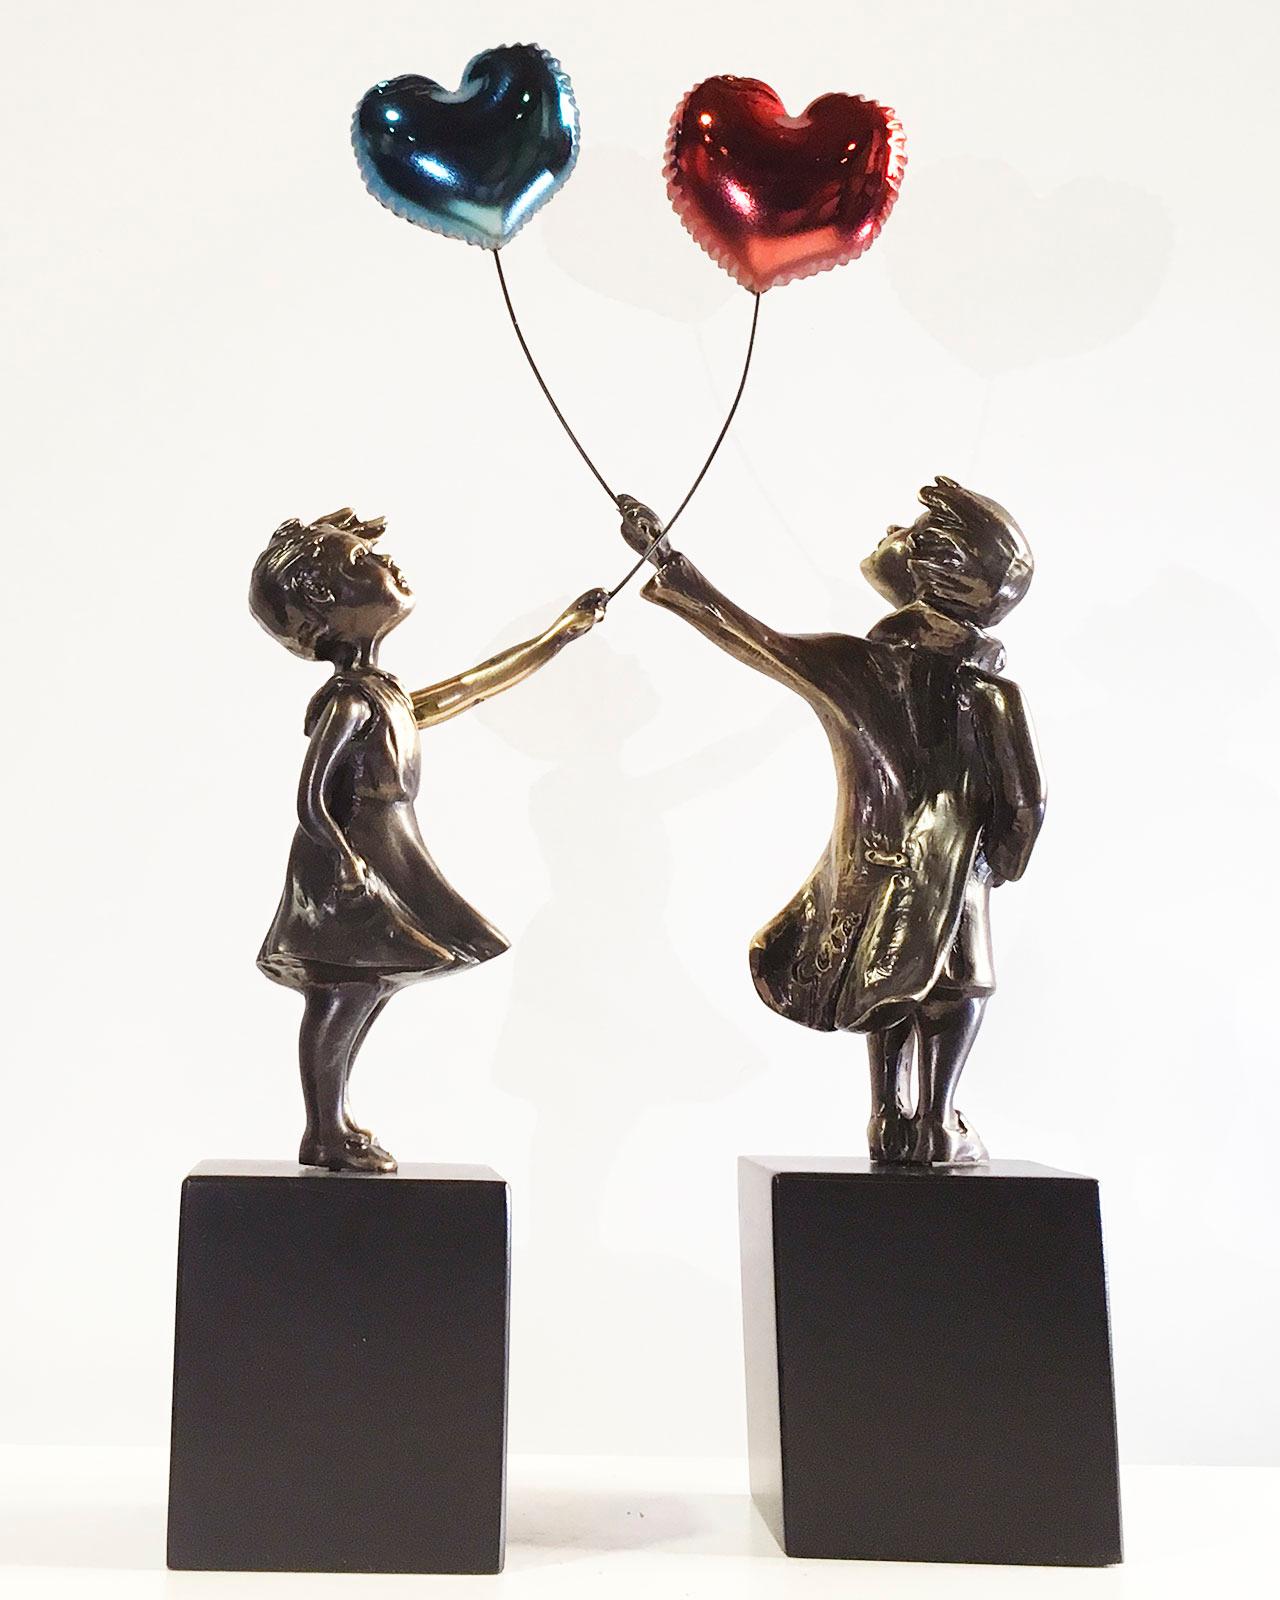 A boy with balloon Big - Miguel Guía Street Art Cast bronze Sculpture 7